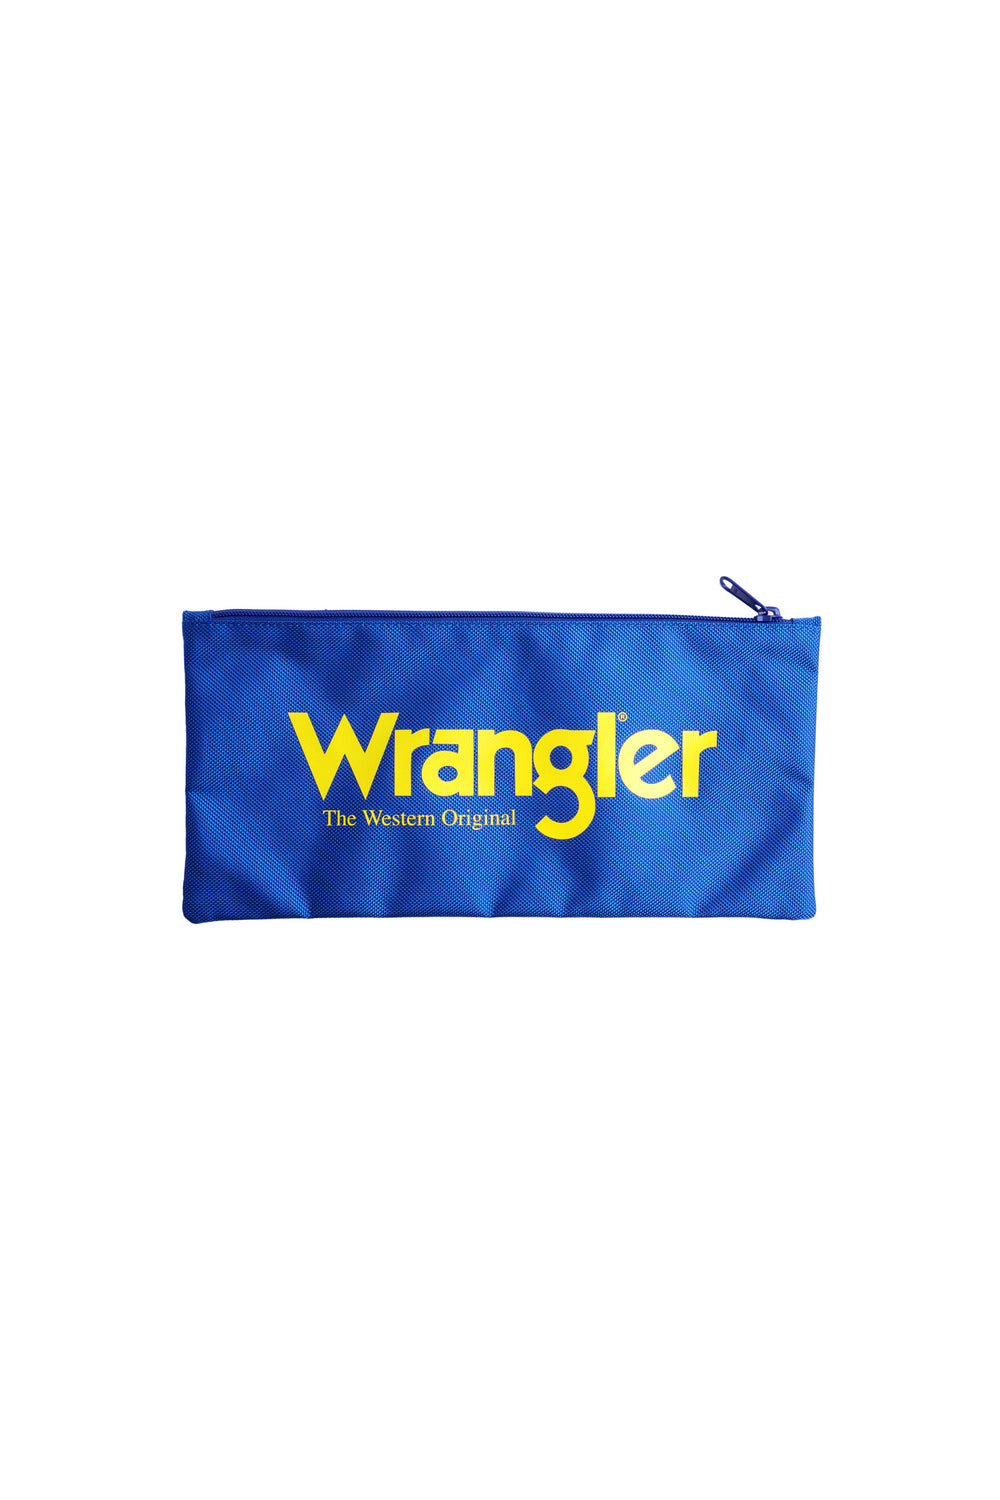 Wrangler - Iconic Pencil Case